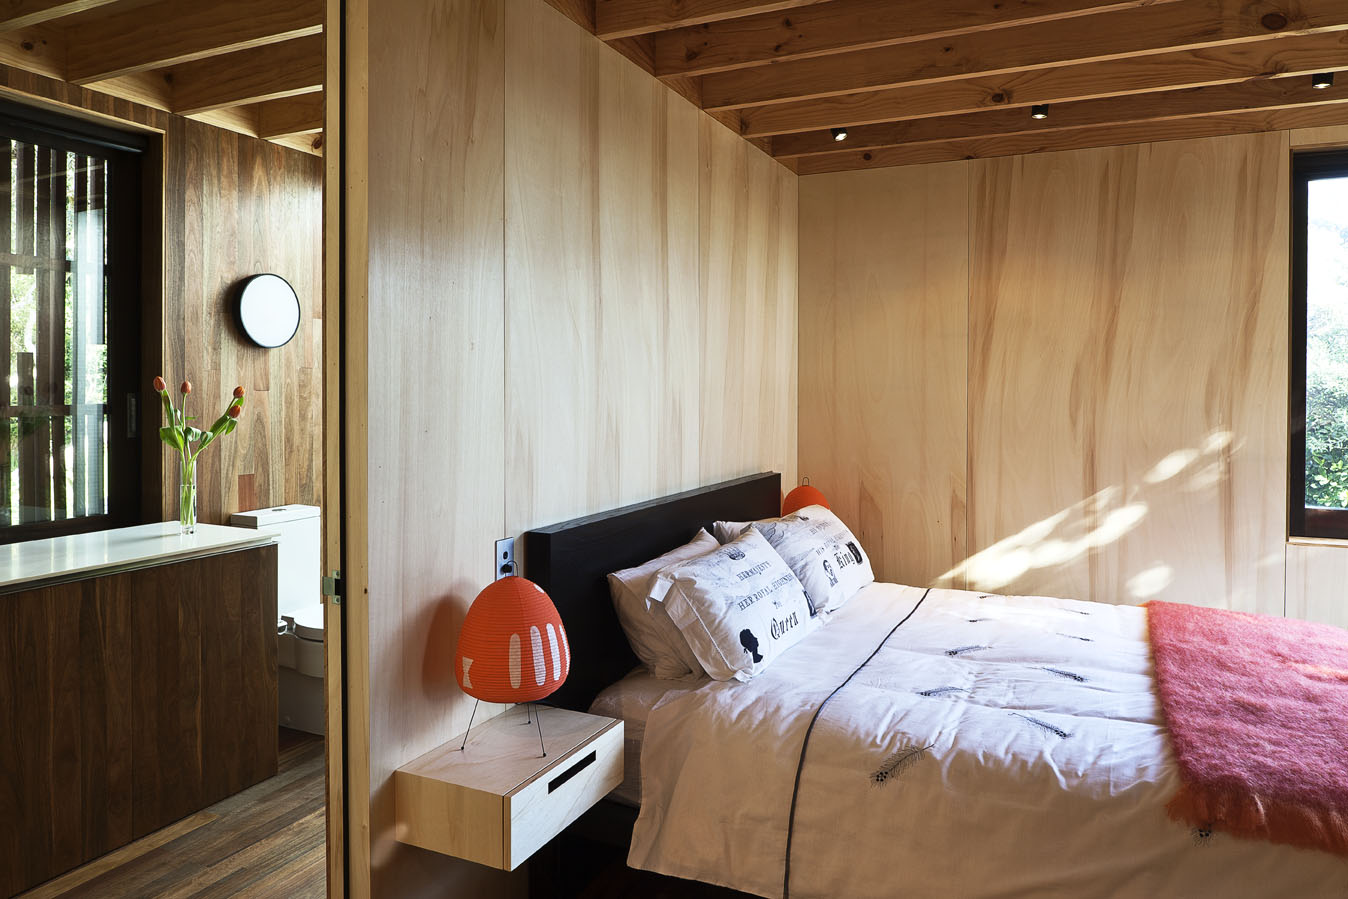 wooden-raw-exposed-modern-bedroom-interior-stylish-inspiration12